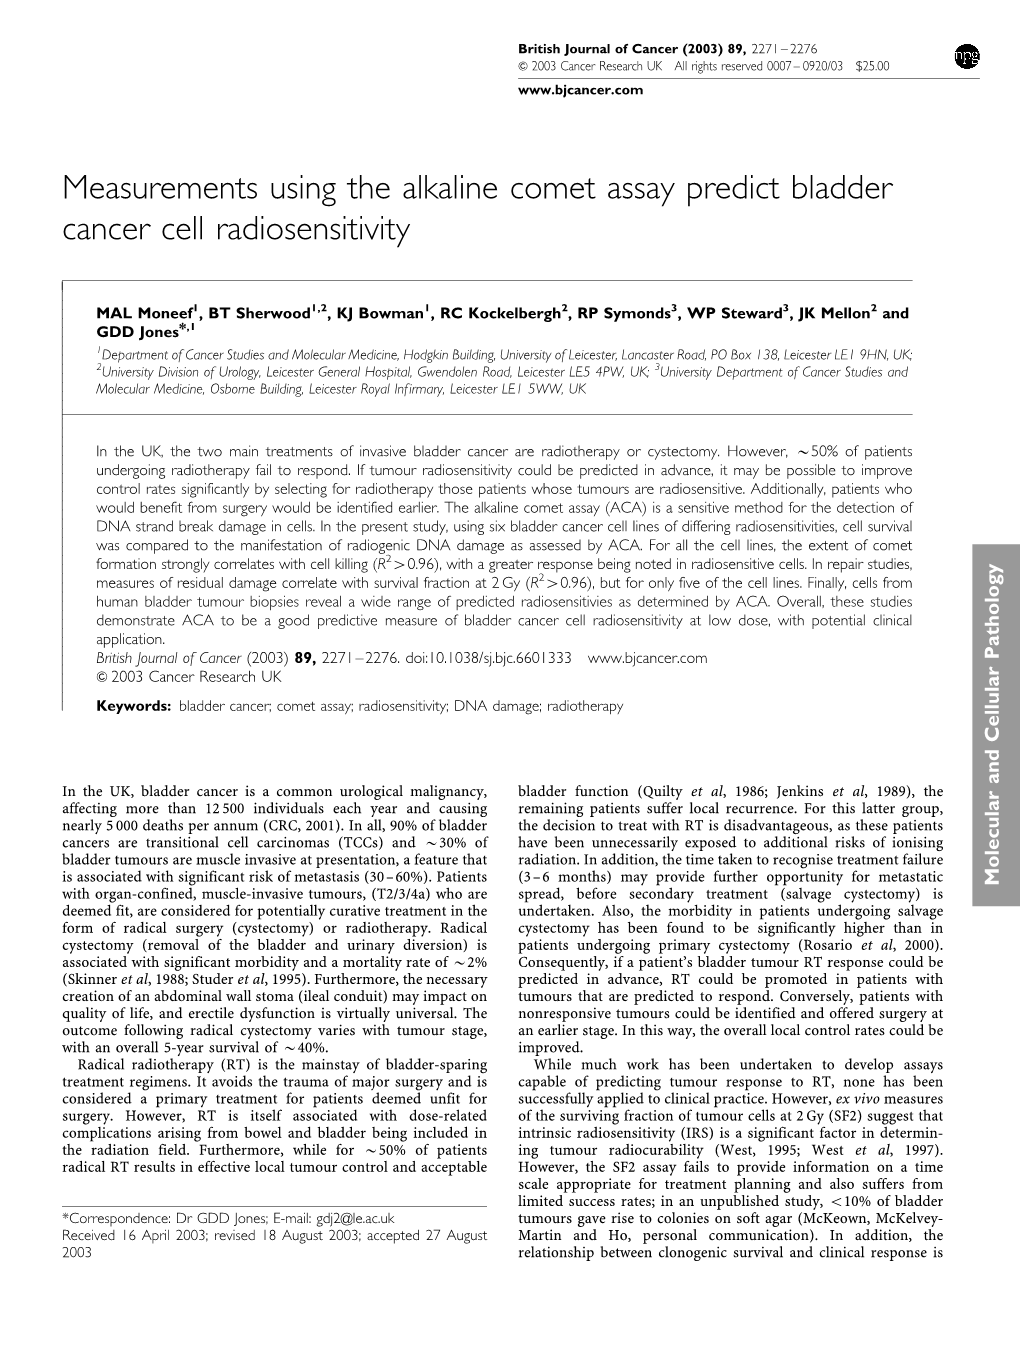 Measurements Using the Alkaline Comet Assay Predict Bladder Cancer Cell Radiosensitivity